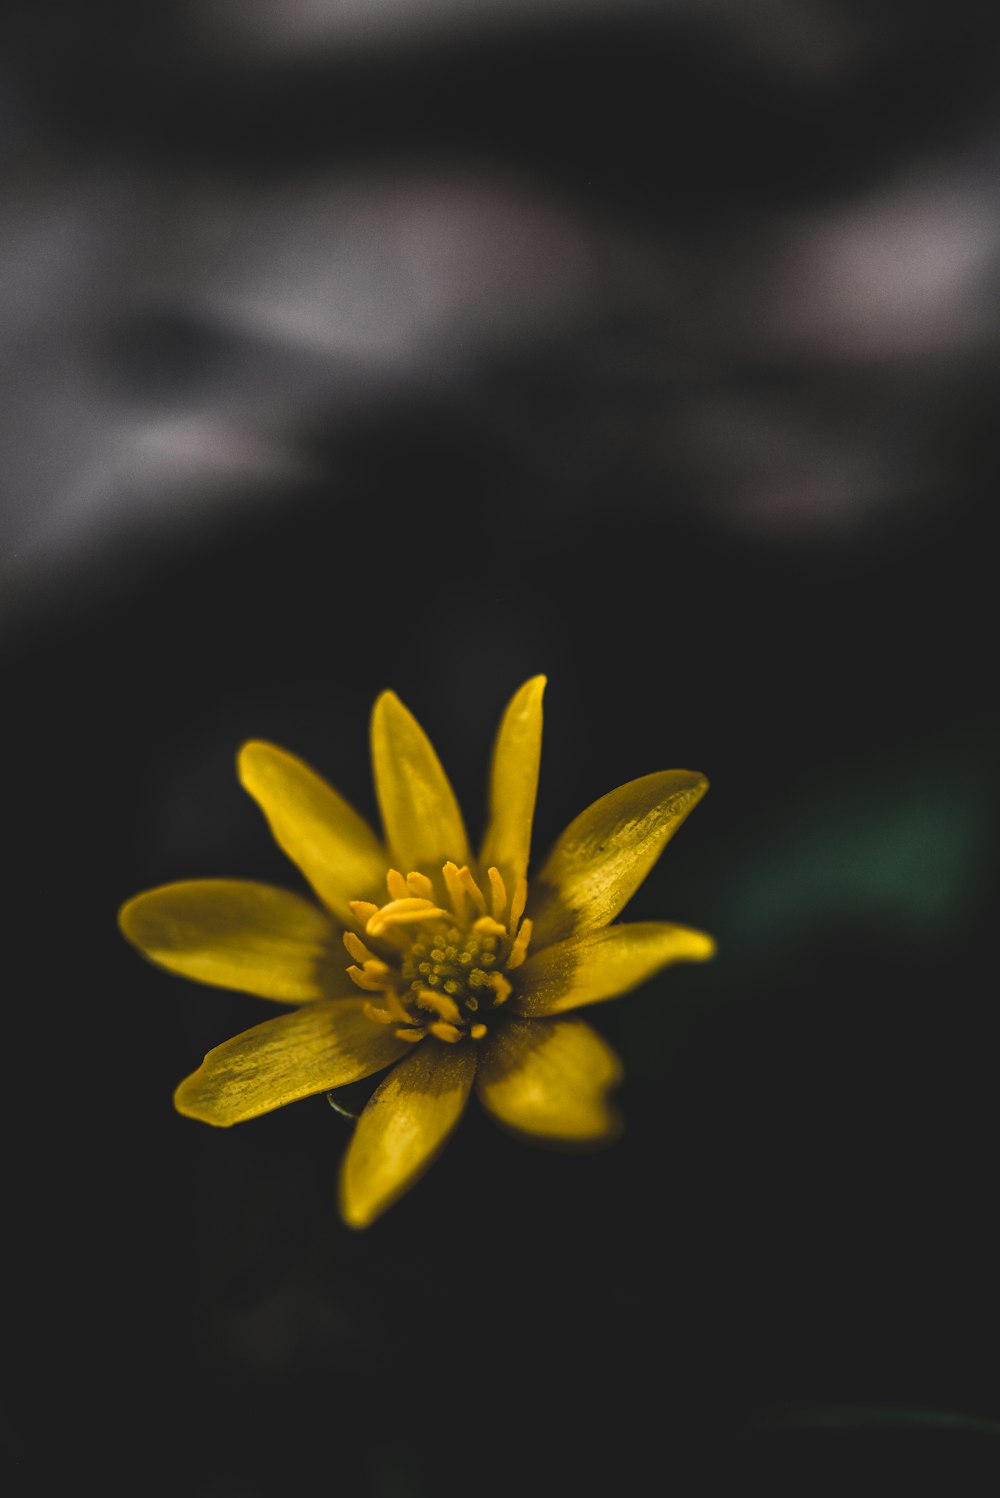 flor amarilla sobre fondo negro